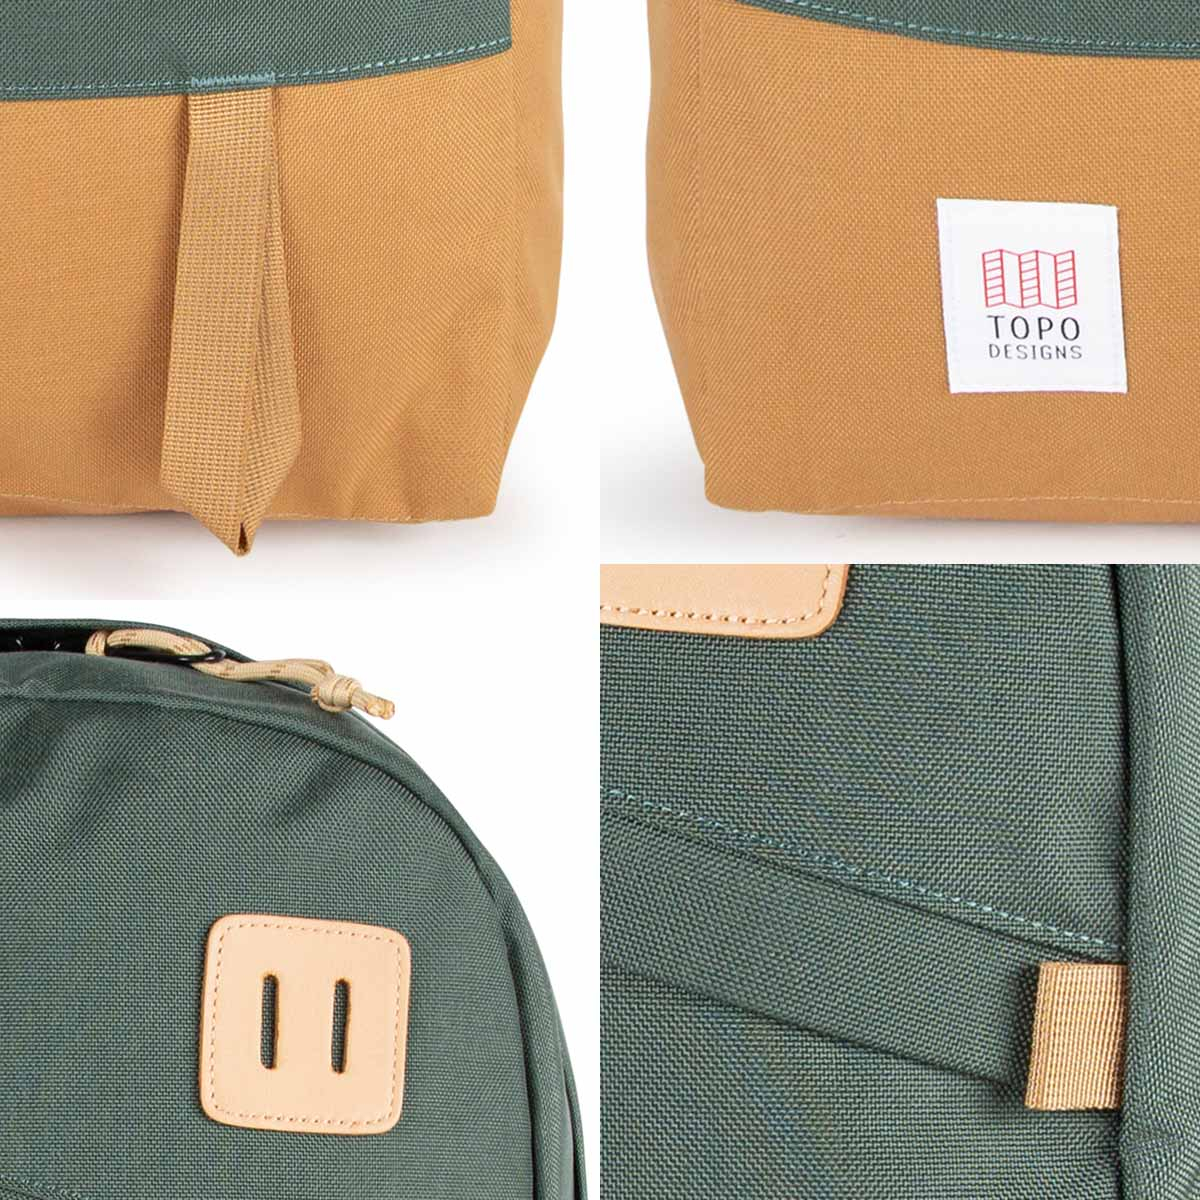 Topo Designs Daypack Classic Forest/Khaki, details